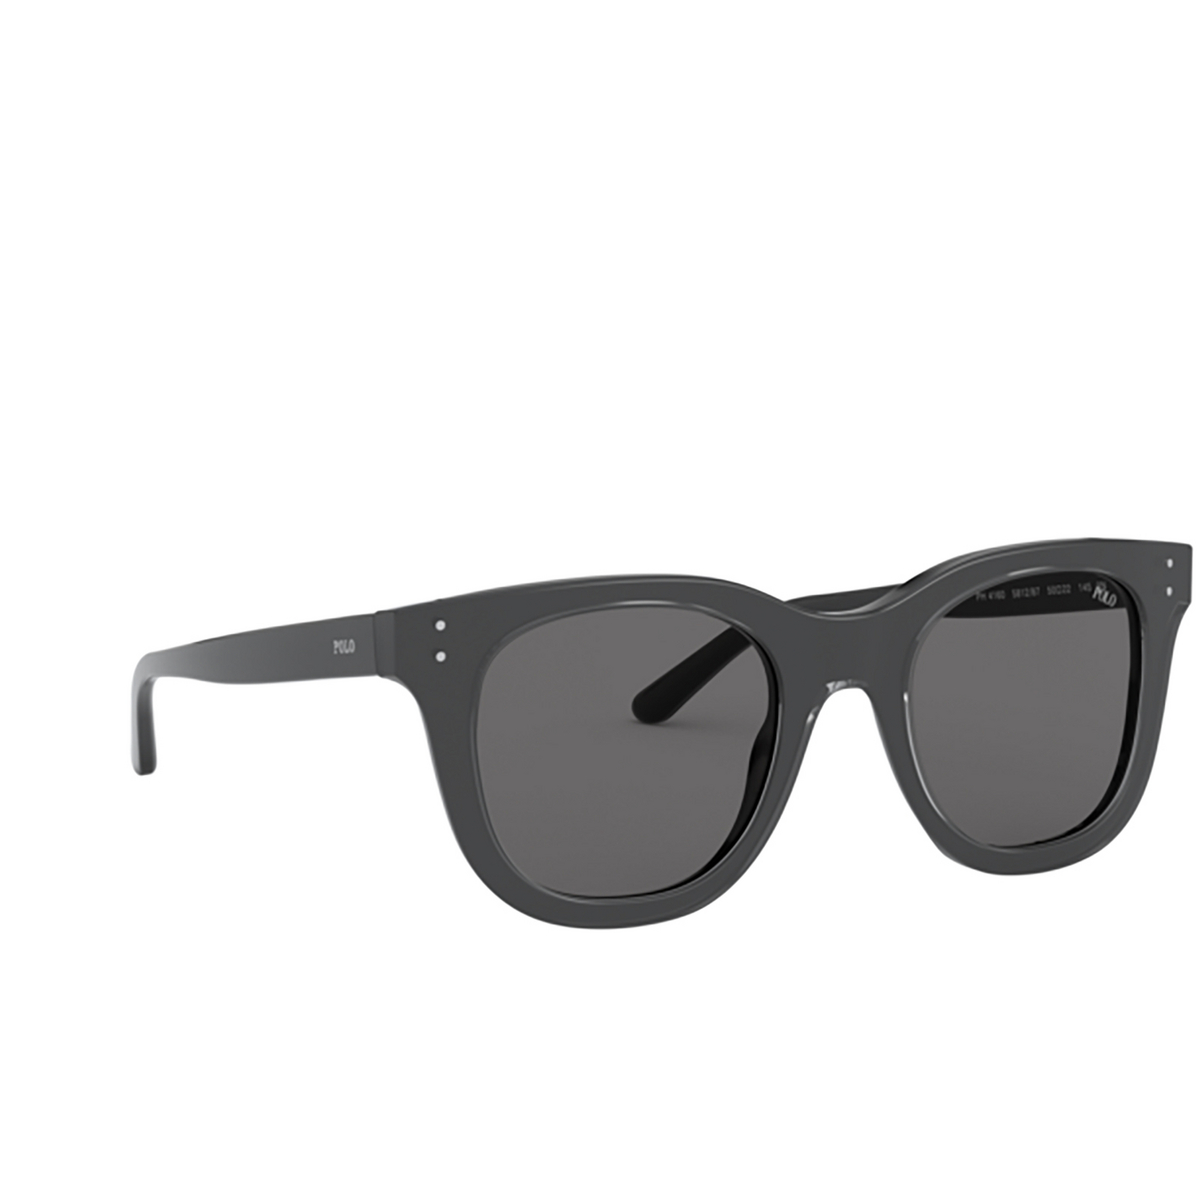 Polo Ralph Lauren® Square Sunglasses: PH4160 color Shiny Crystal On Black 581287 - three-quarters view.